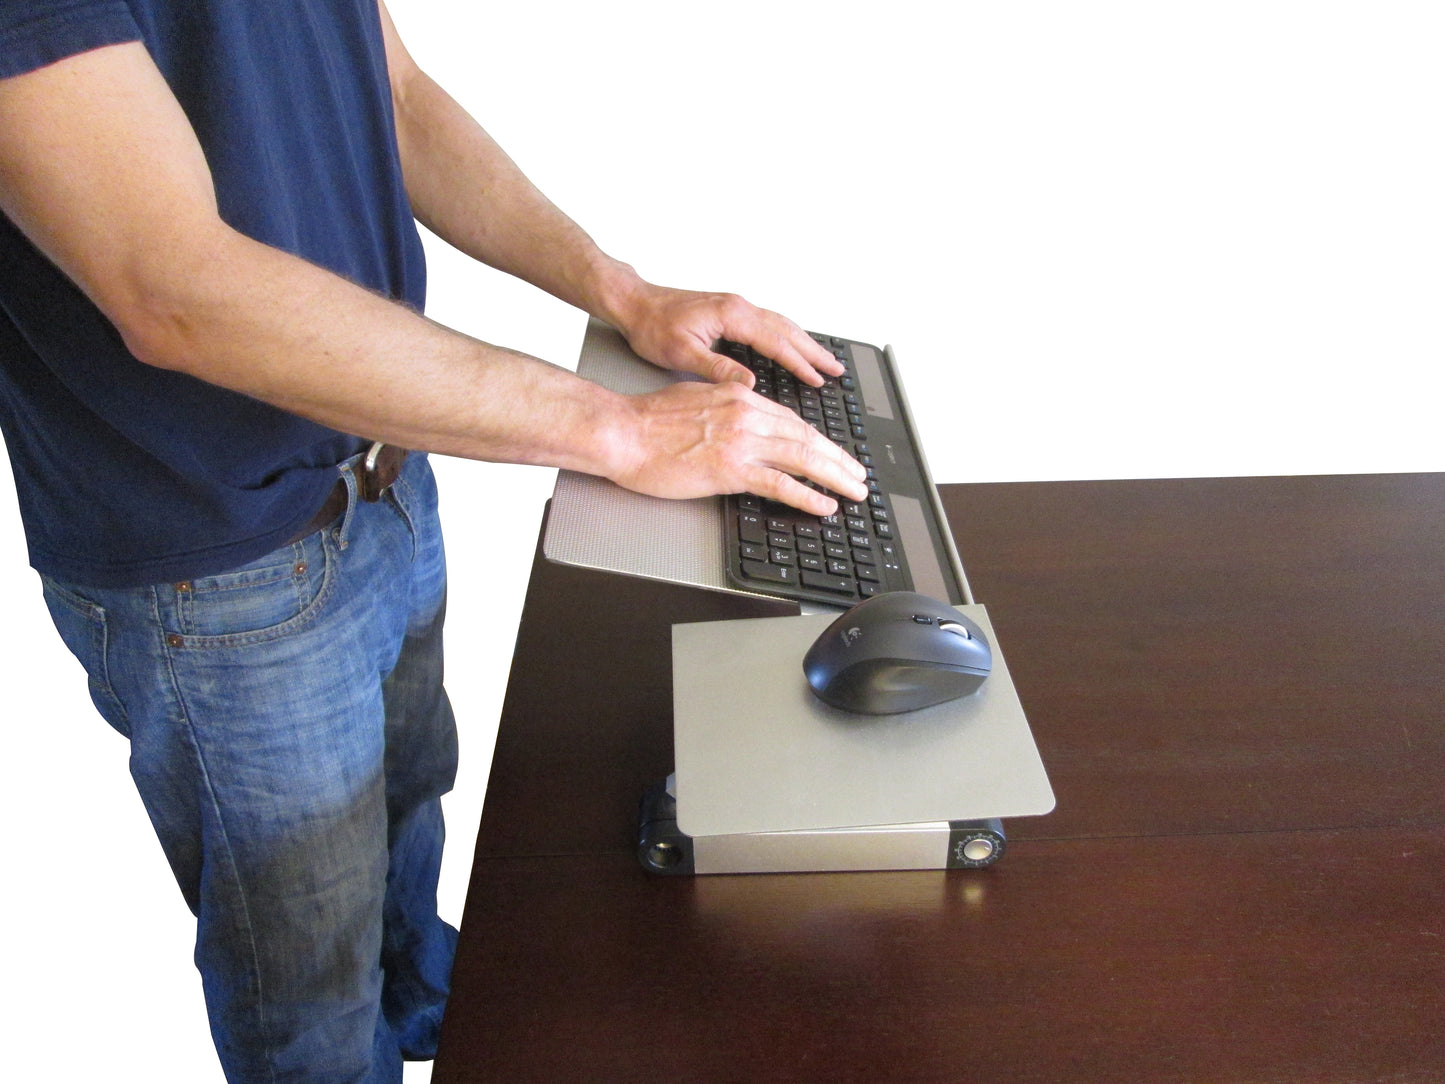 WorkEZ Keyboard Tray